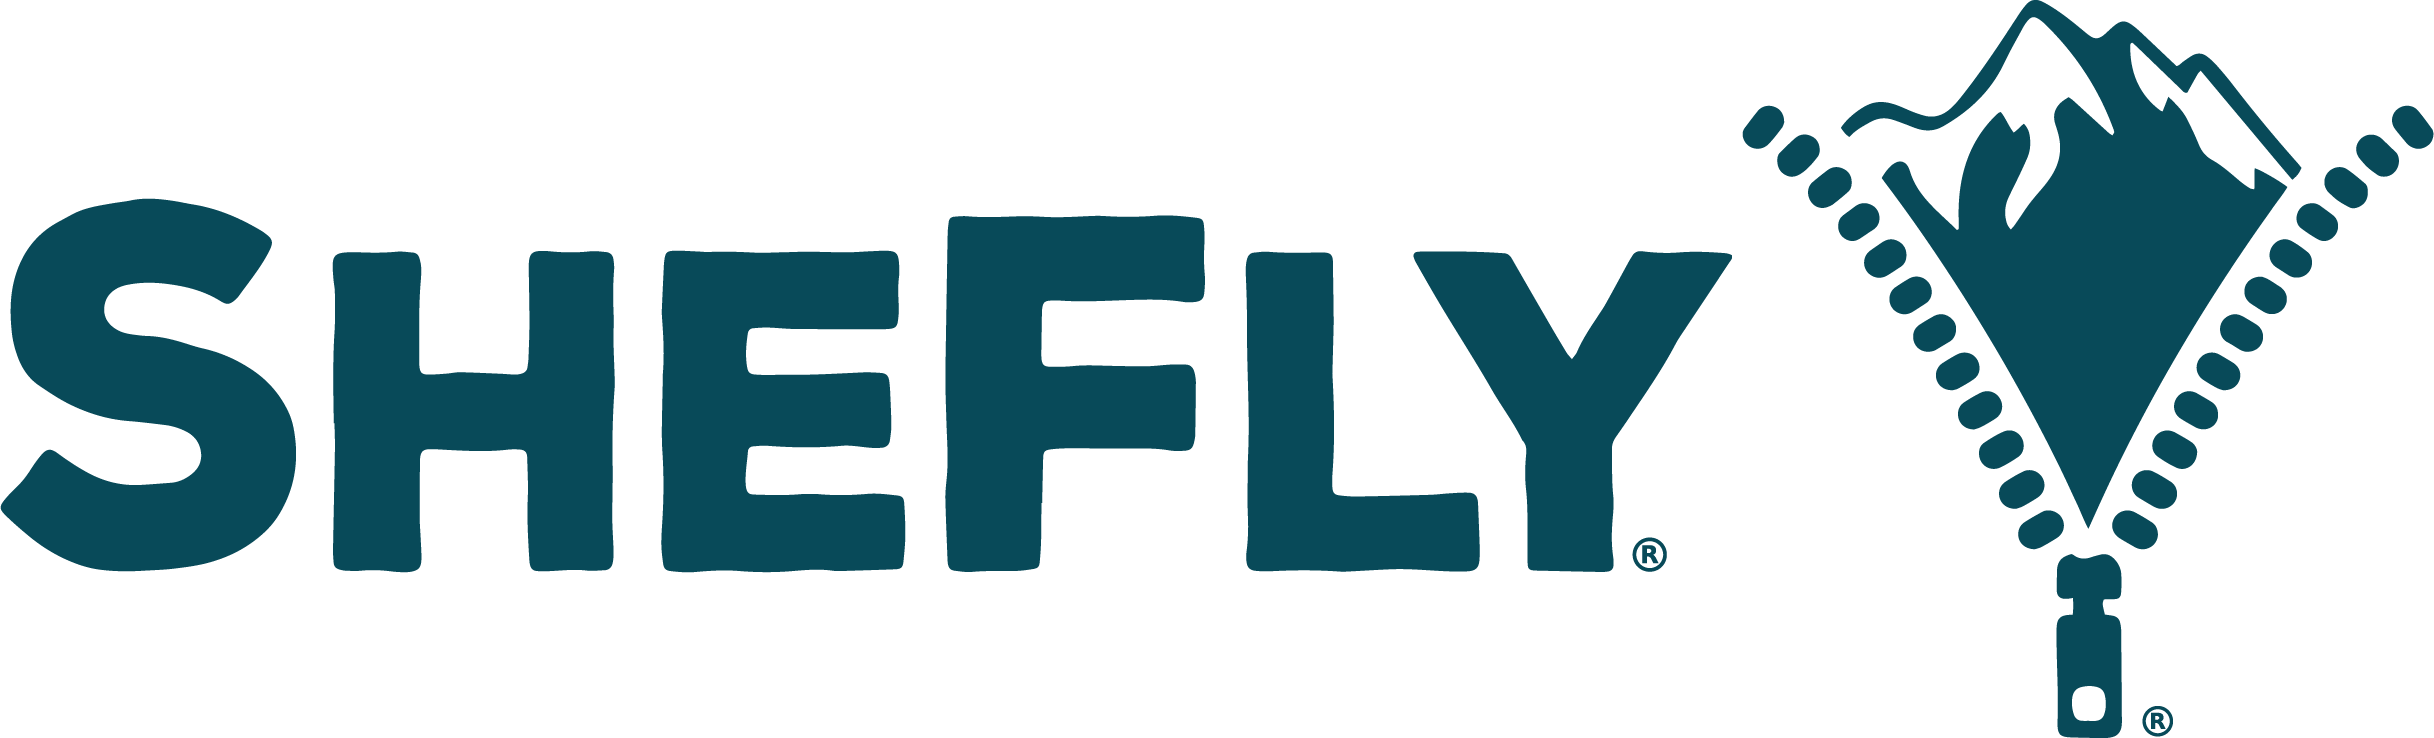 SheFly - Logo.png